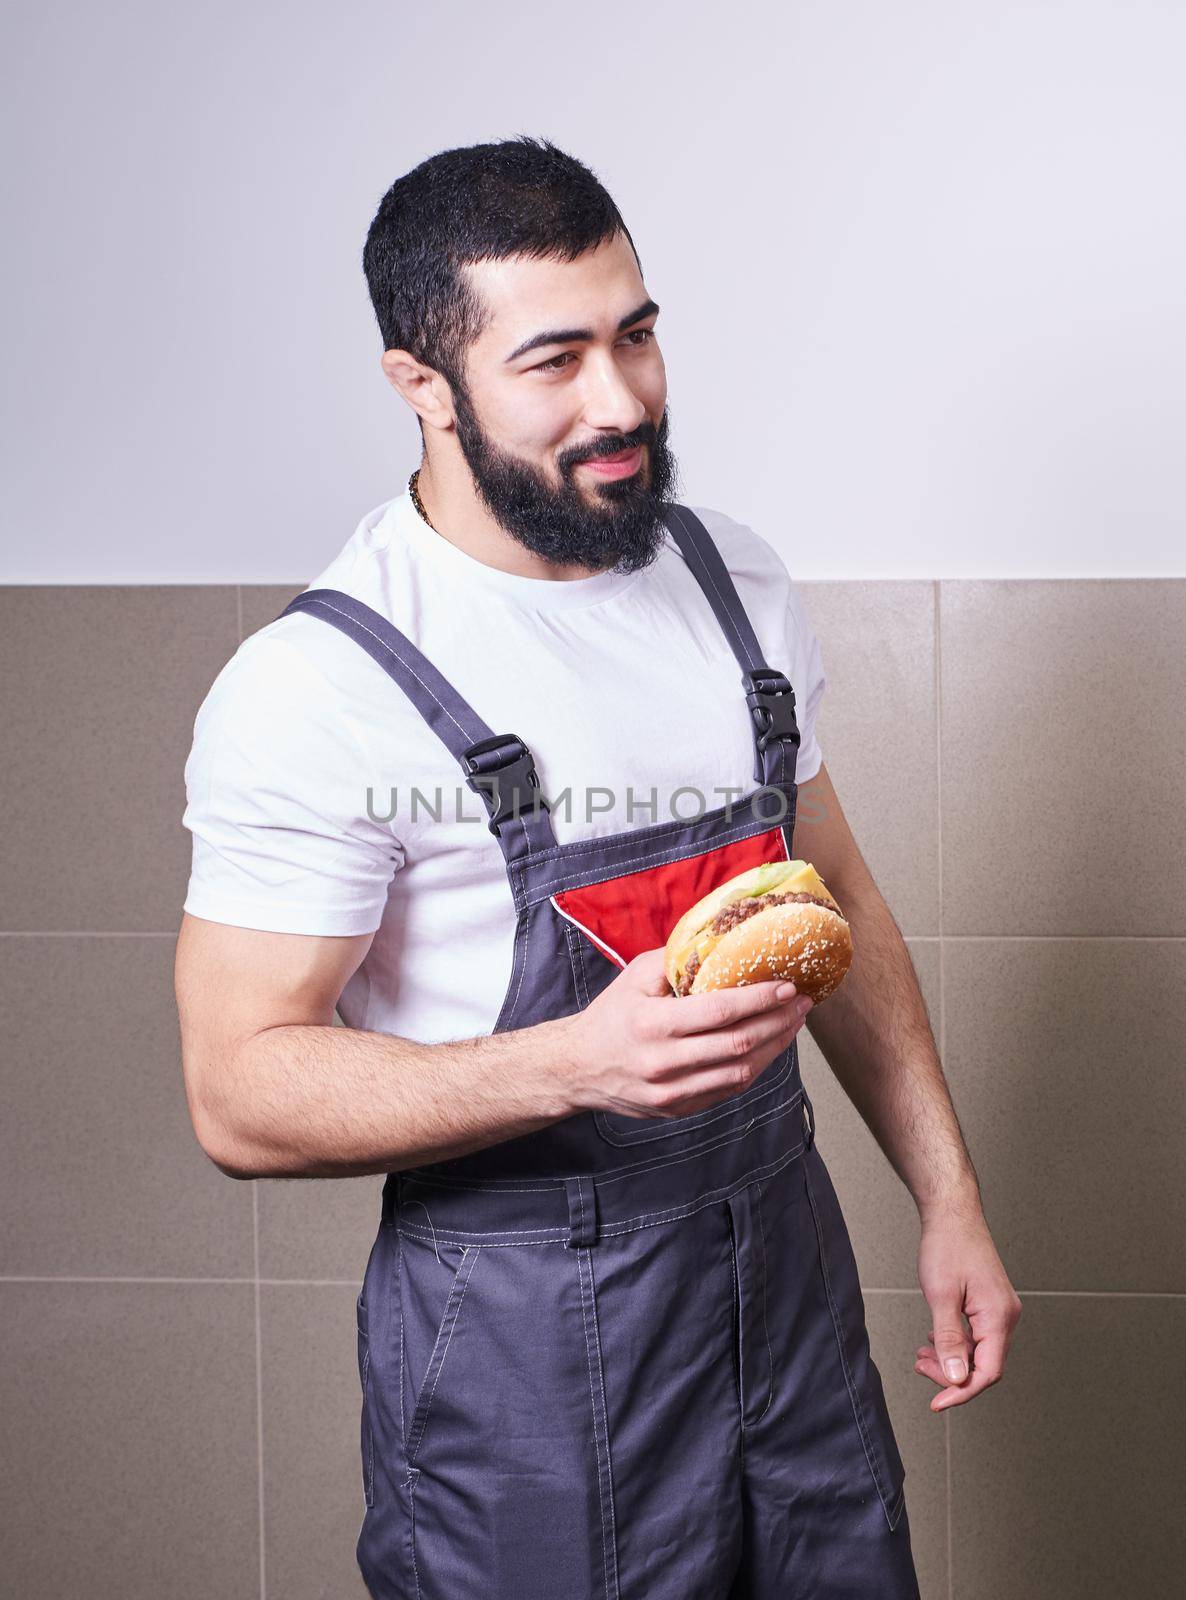 Worker wearing uniform eating burger during lunch break by Mariakray